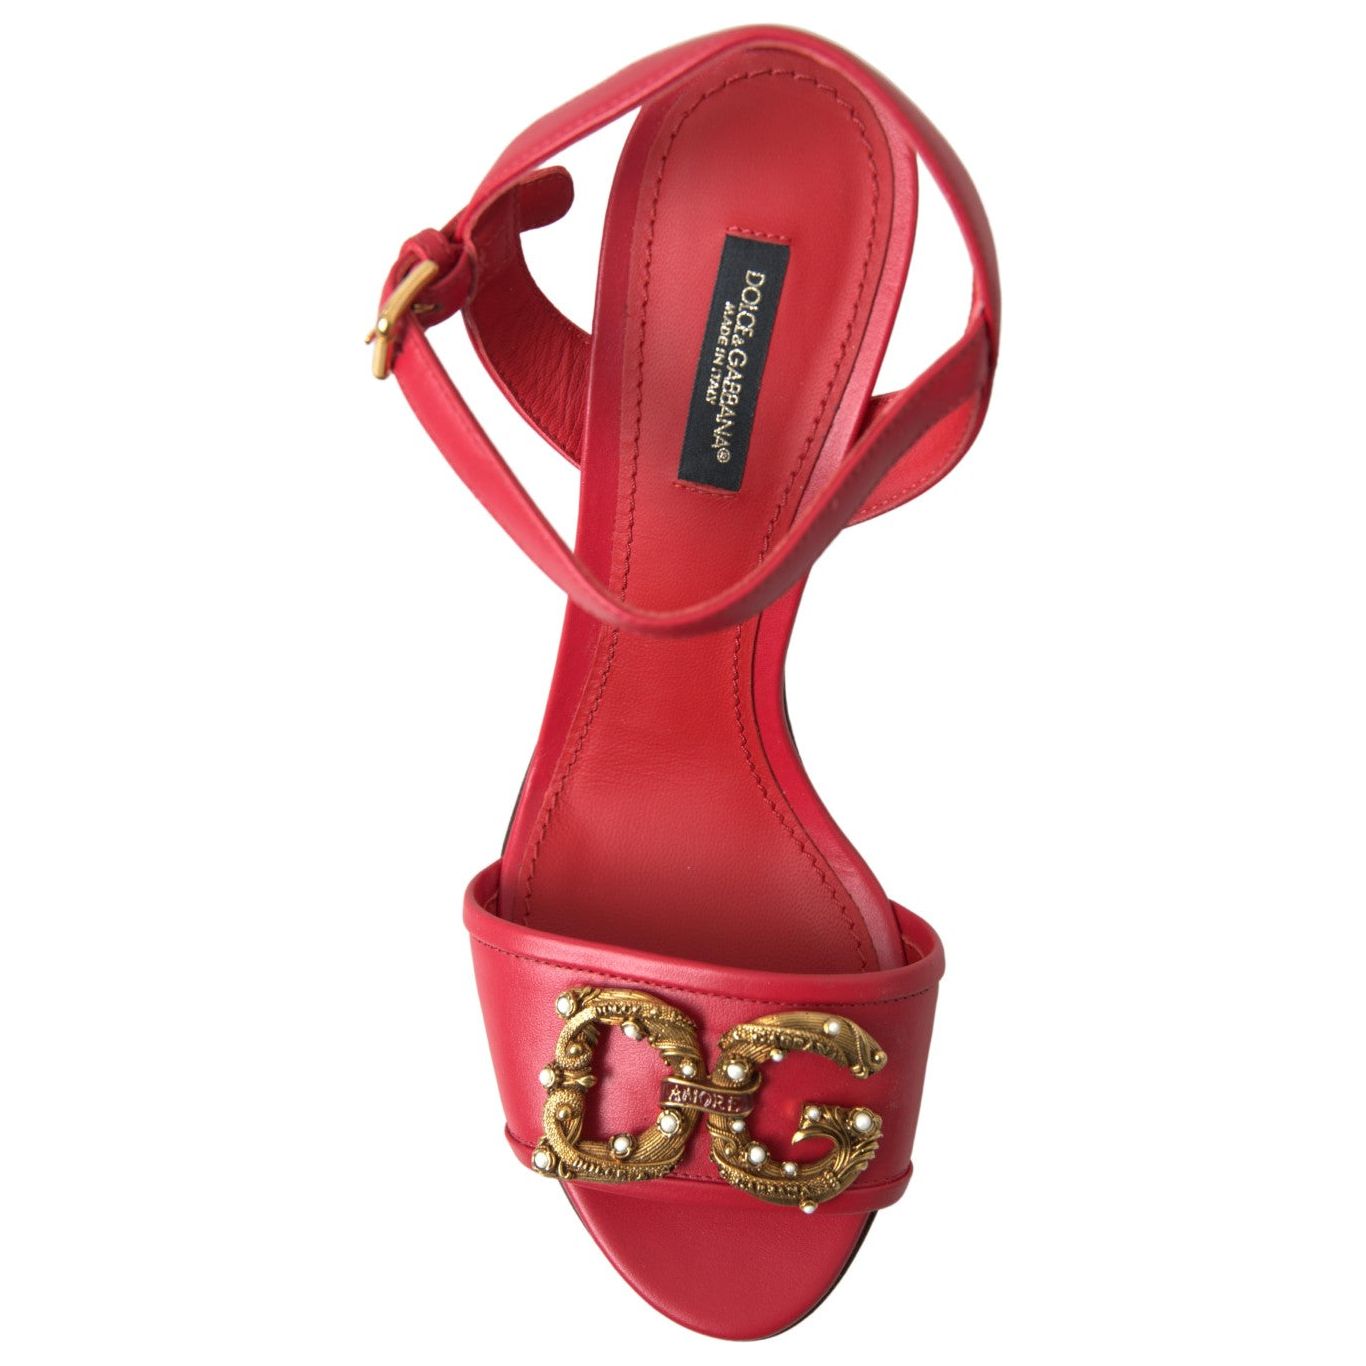 Dolce & Gabbana Red Stiletto Sandal Heels red-ankle-strap-stiletto-heels-sandals-shoes 465A9956-Medium-9df8a2d5-e61.jpg